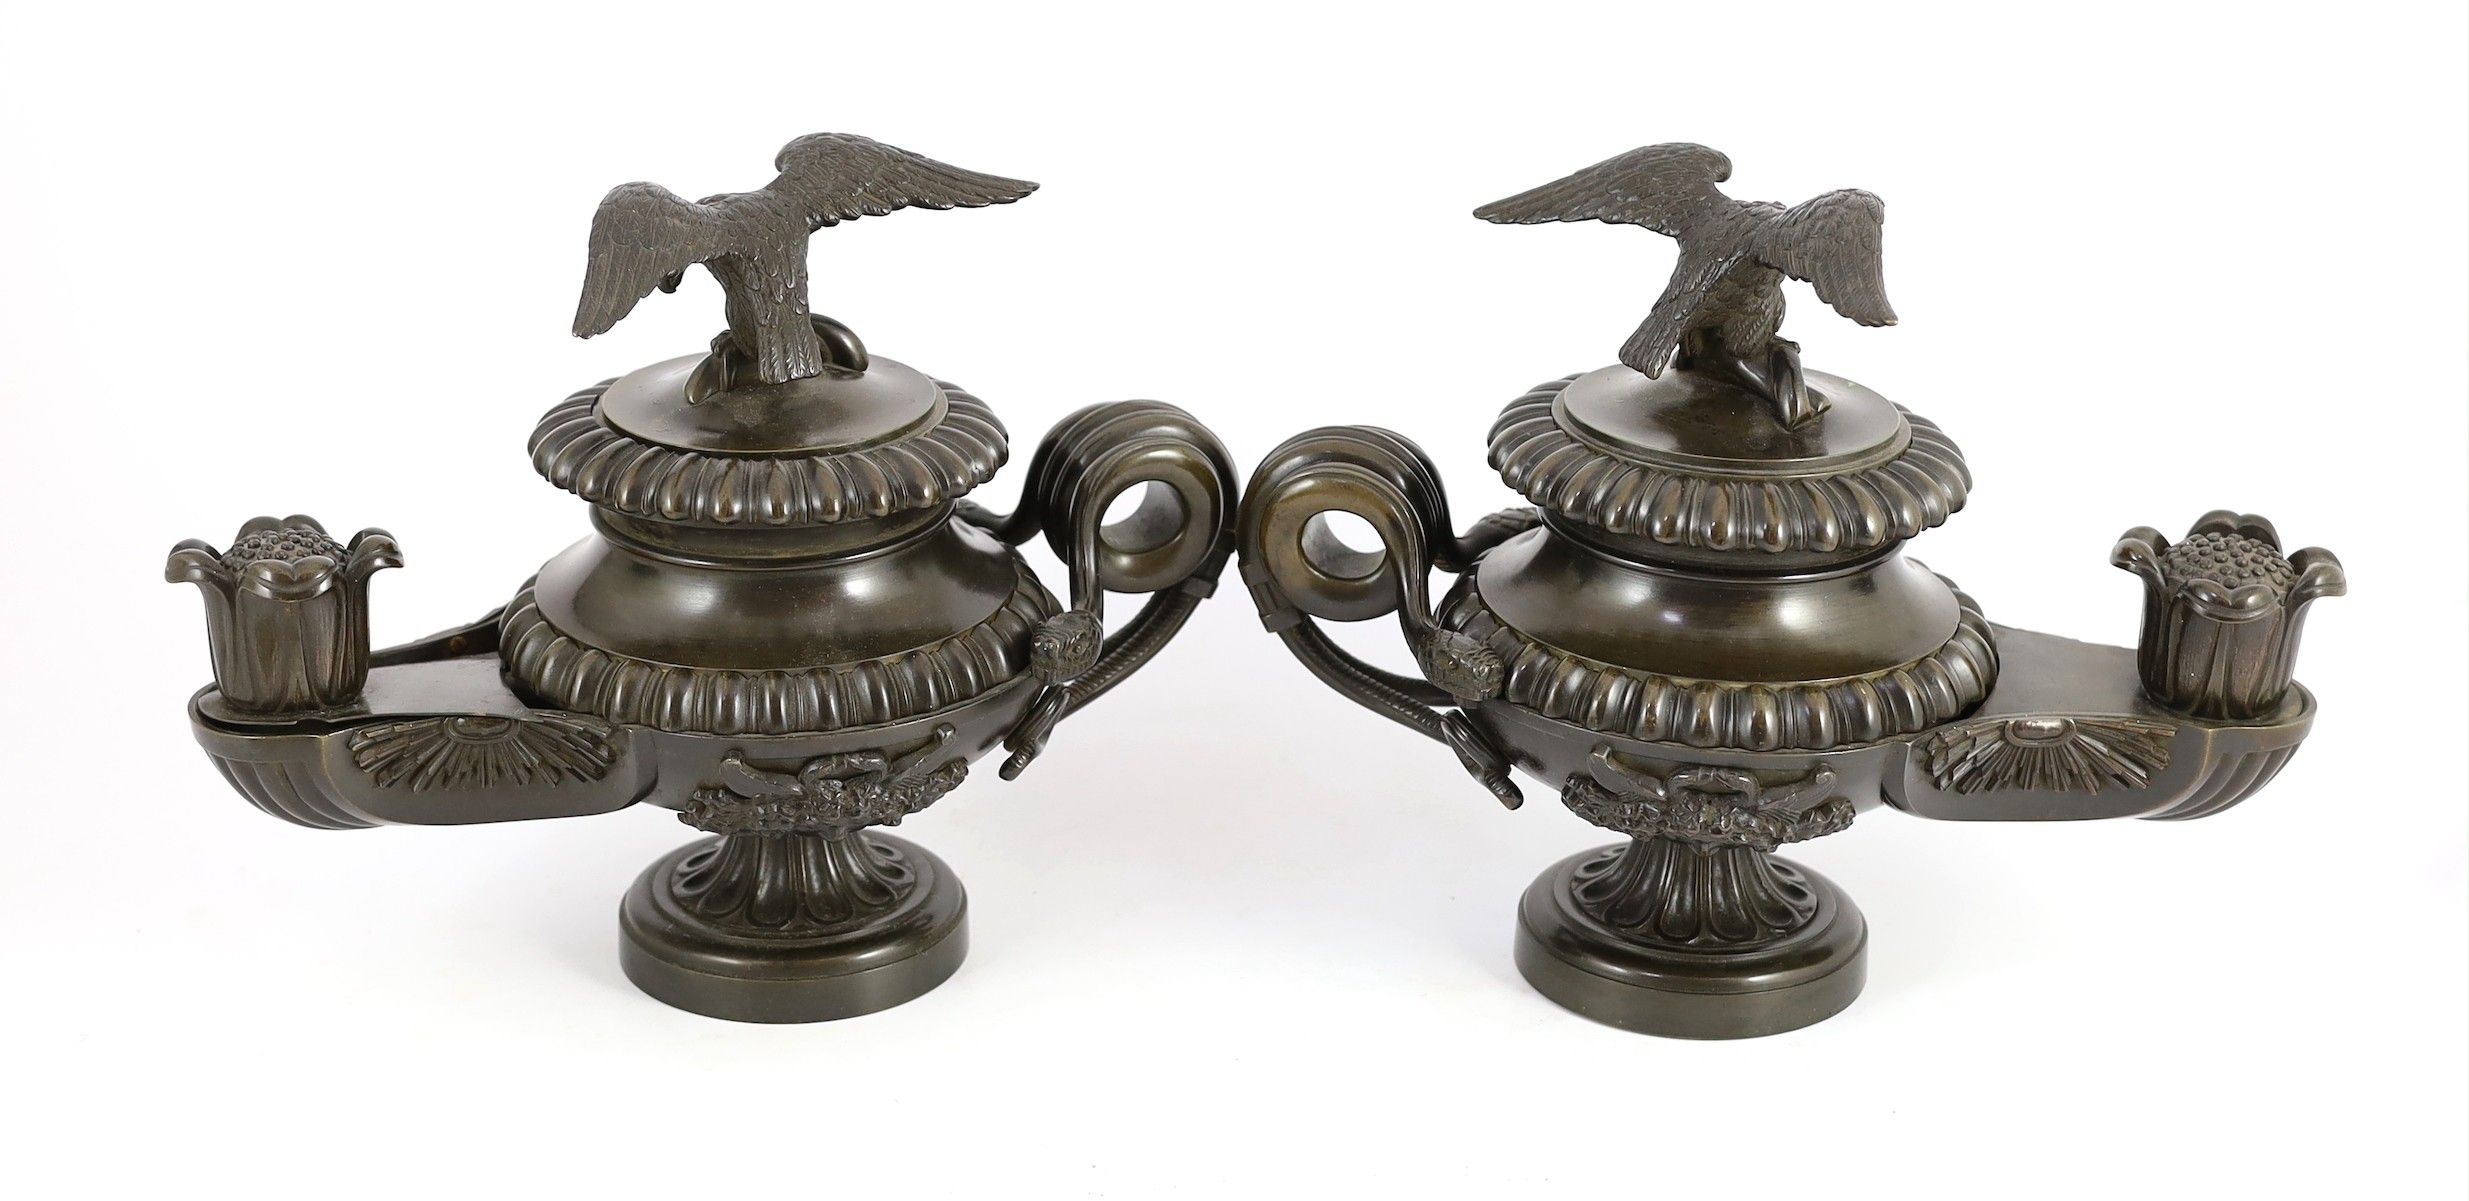 James De Ville, 367 Strand, London. A pair of Regency bronze oil lamps to a design by Thomas Hope, length 31cm depth 16cm height 25cm